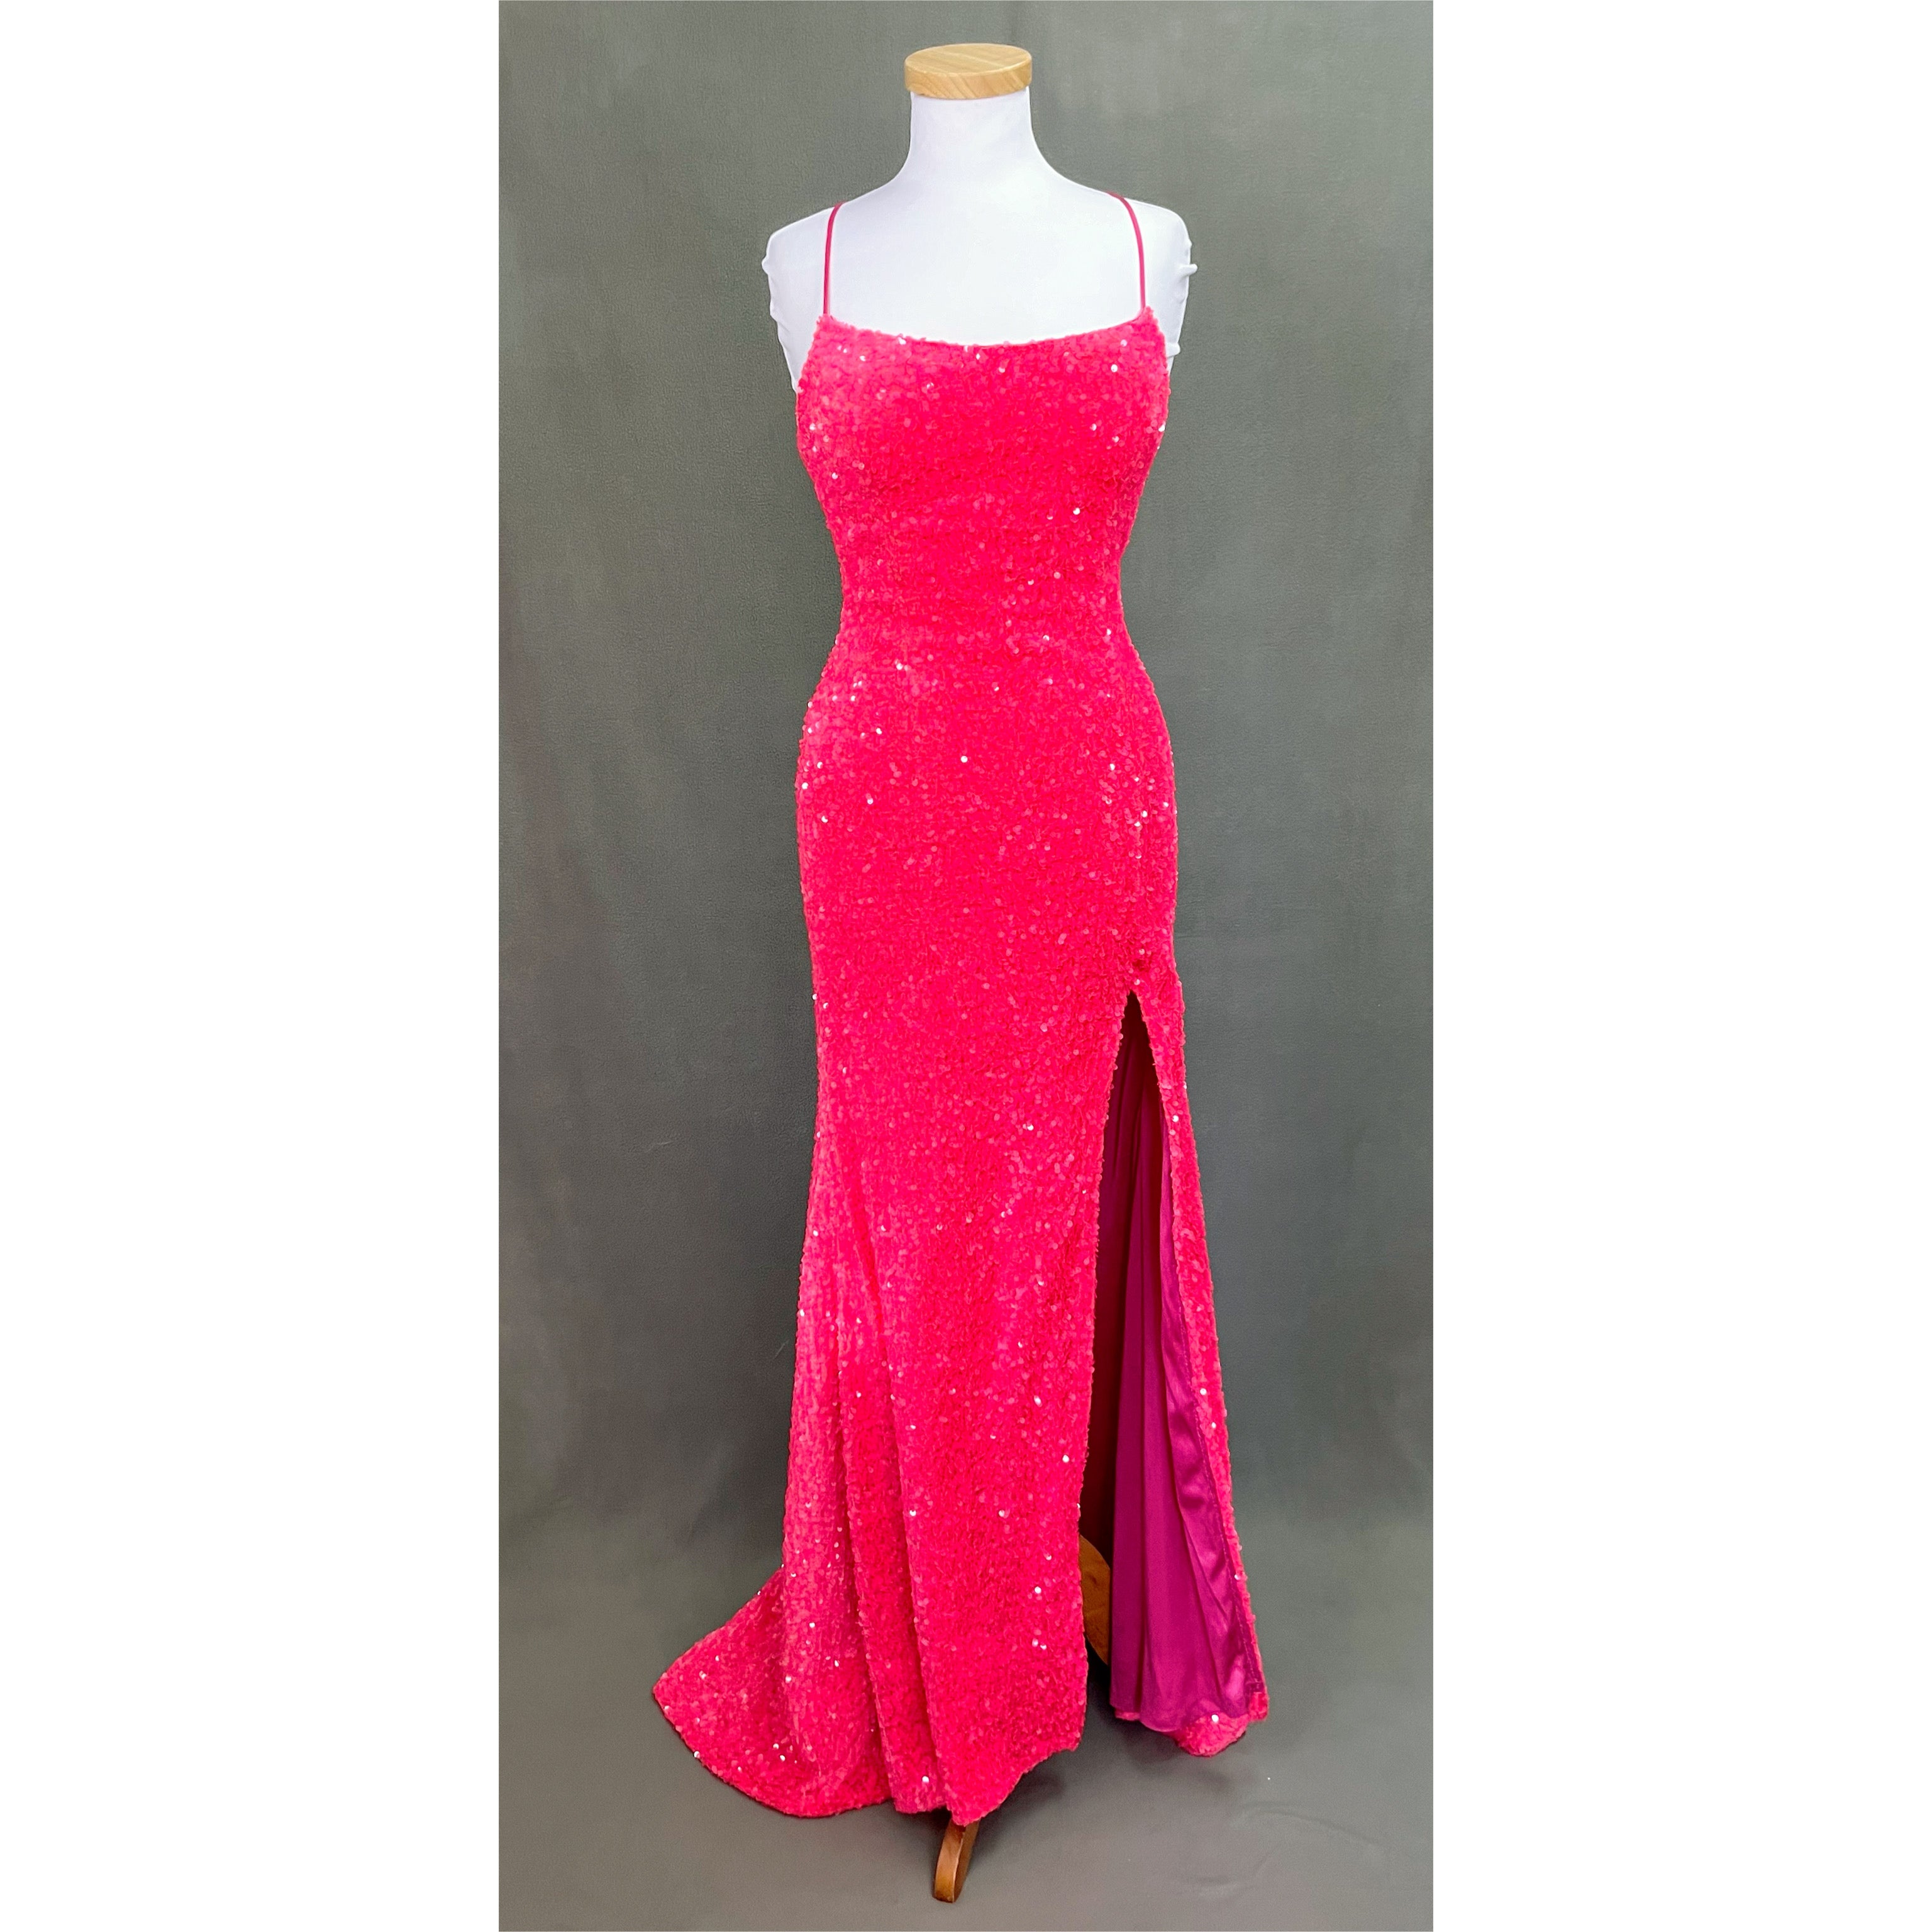 Neon pink sequin dress, size M